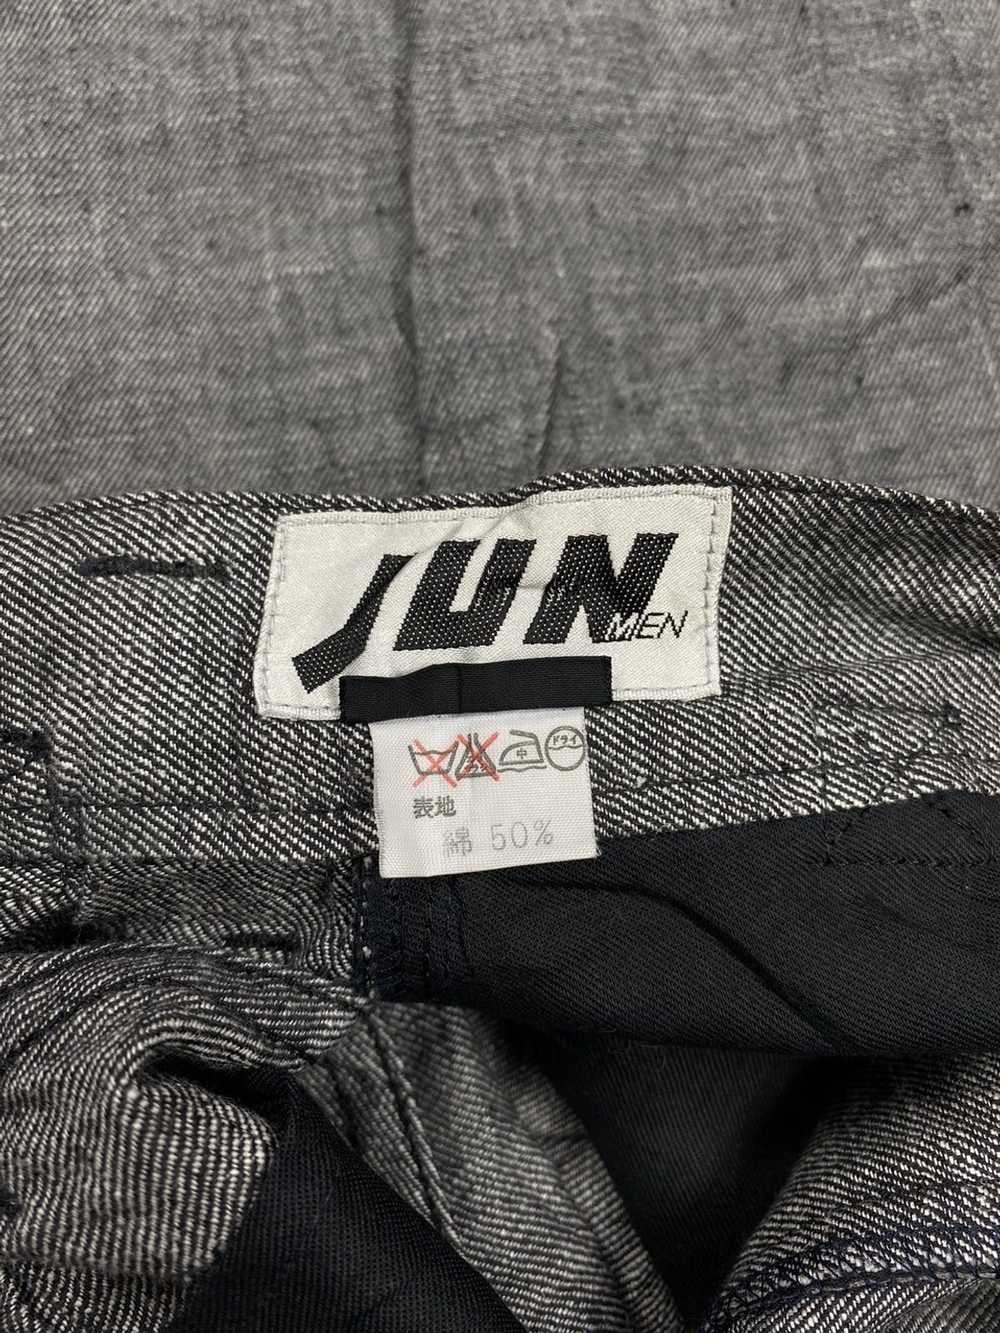 Japanese Brand Jun Men Pant - image 11